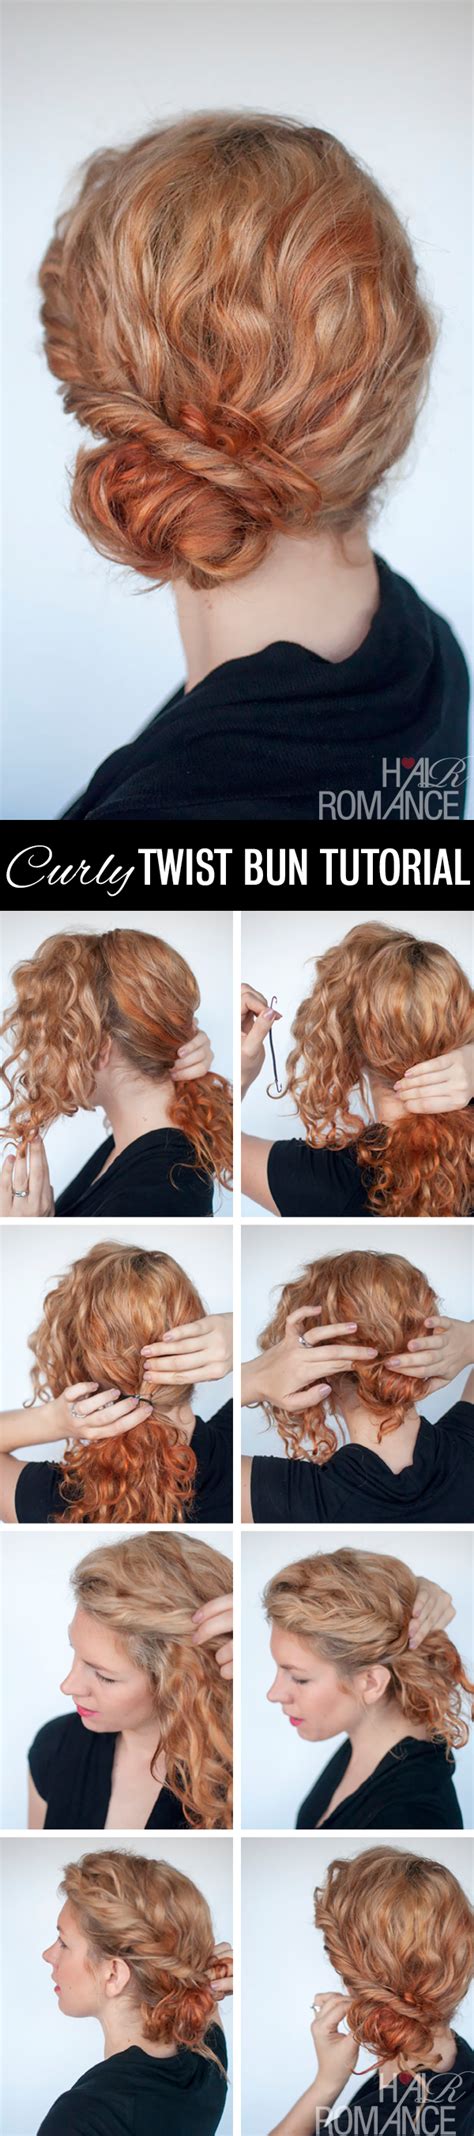 Curly Bun Hairstyle Tutorial Two Ways Hair Romance